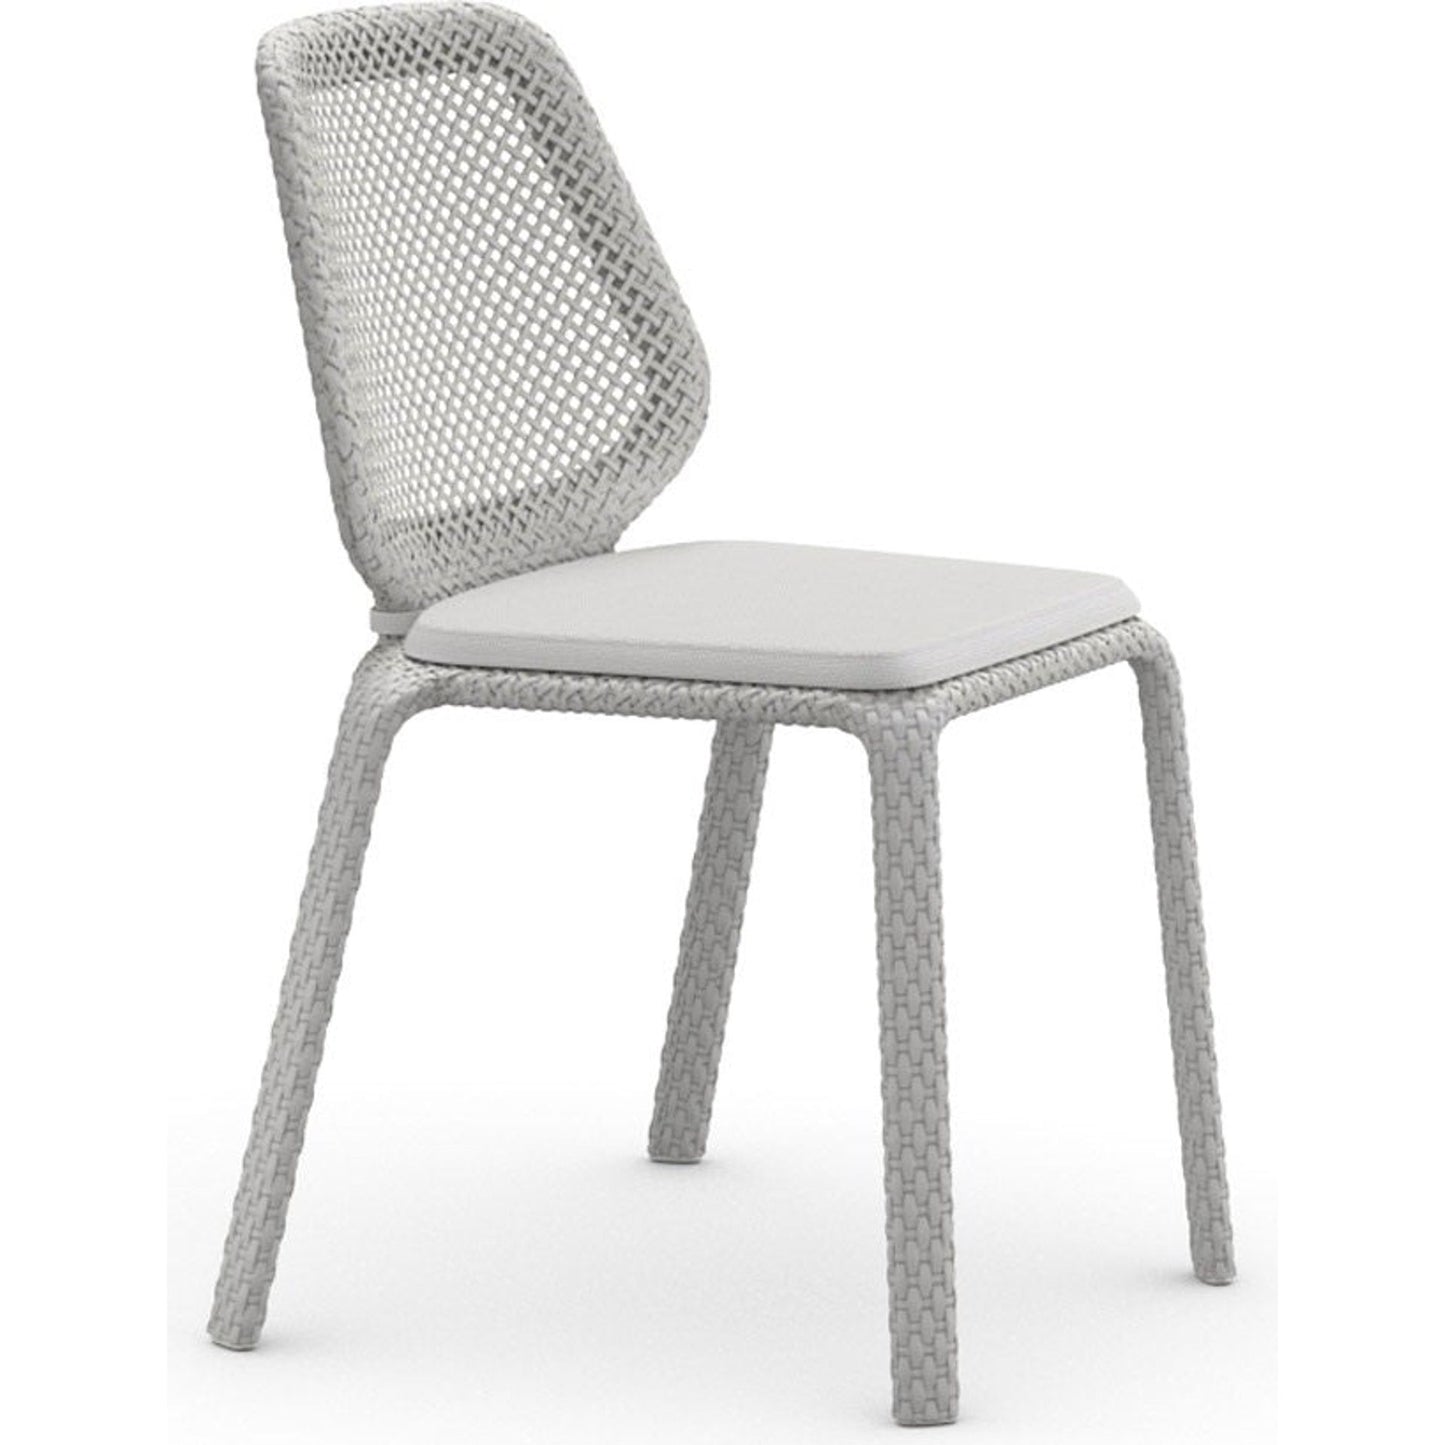 Seashell Side Chair